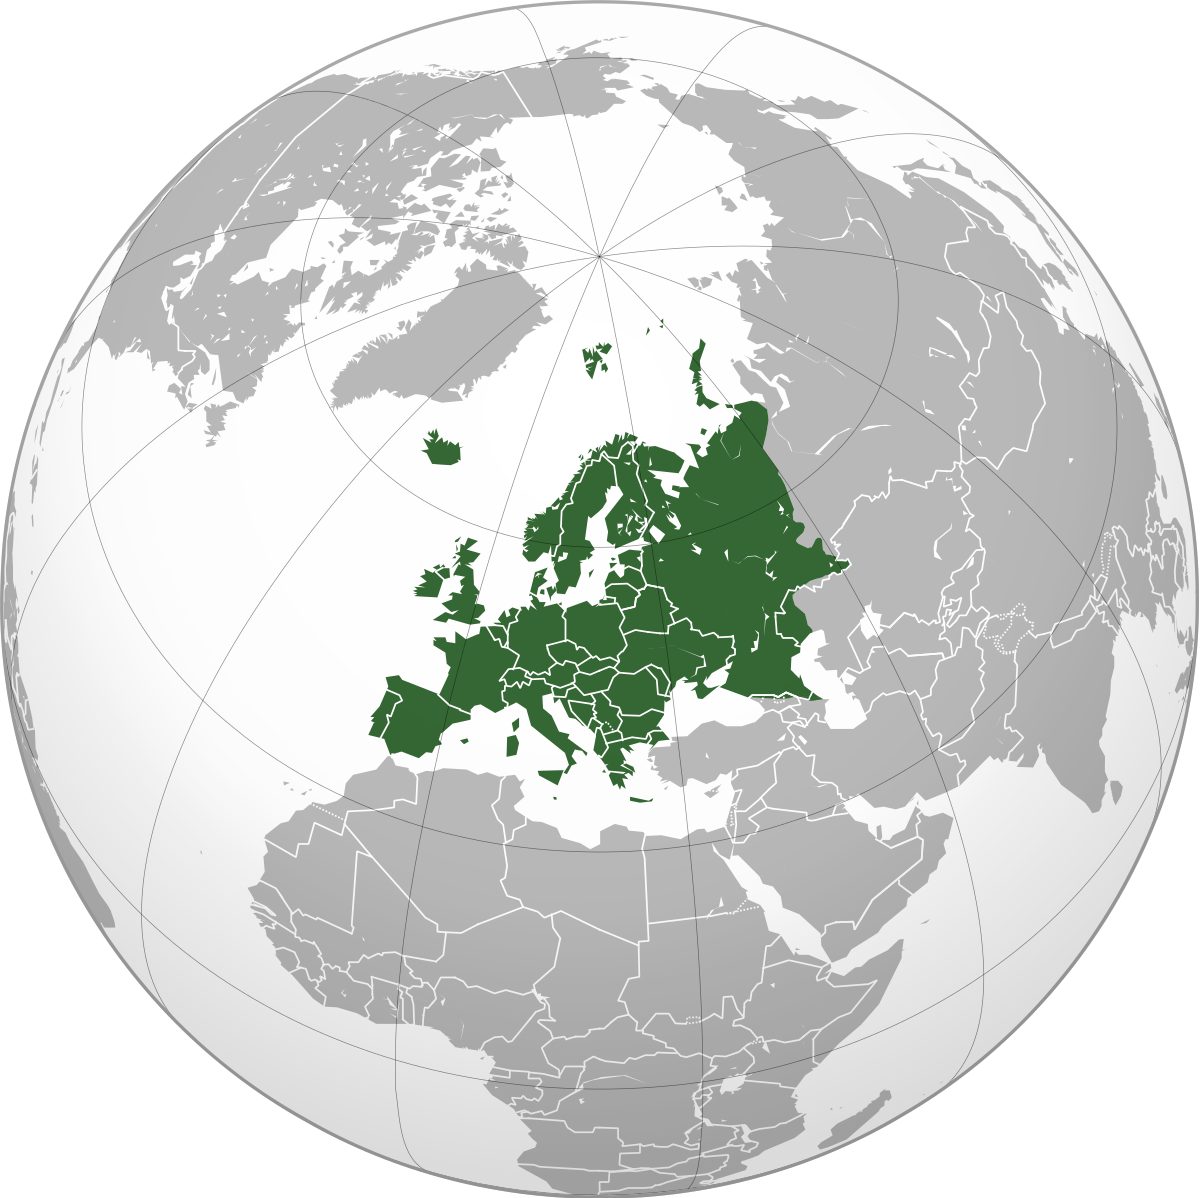 List of Countries in German - Europe